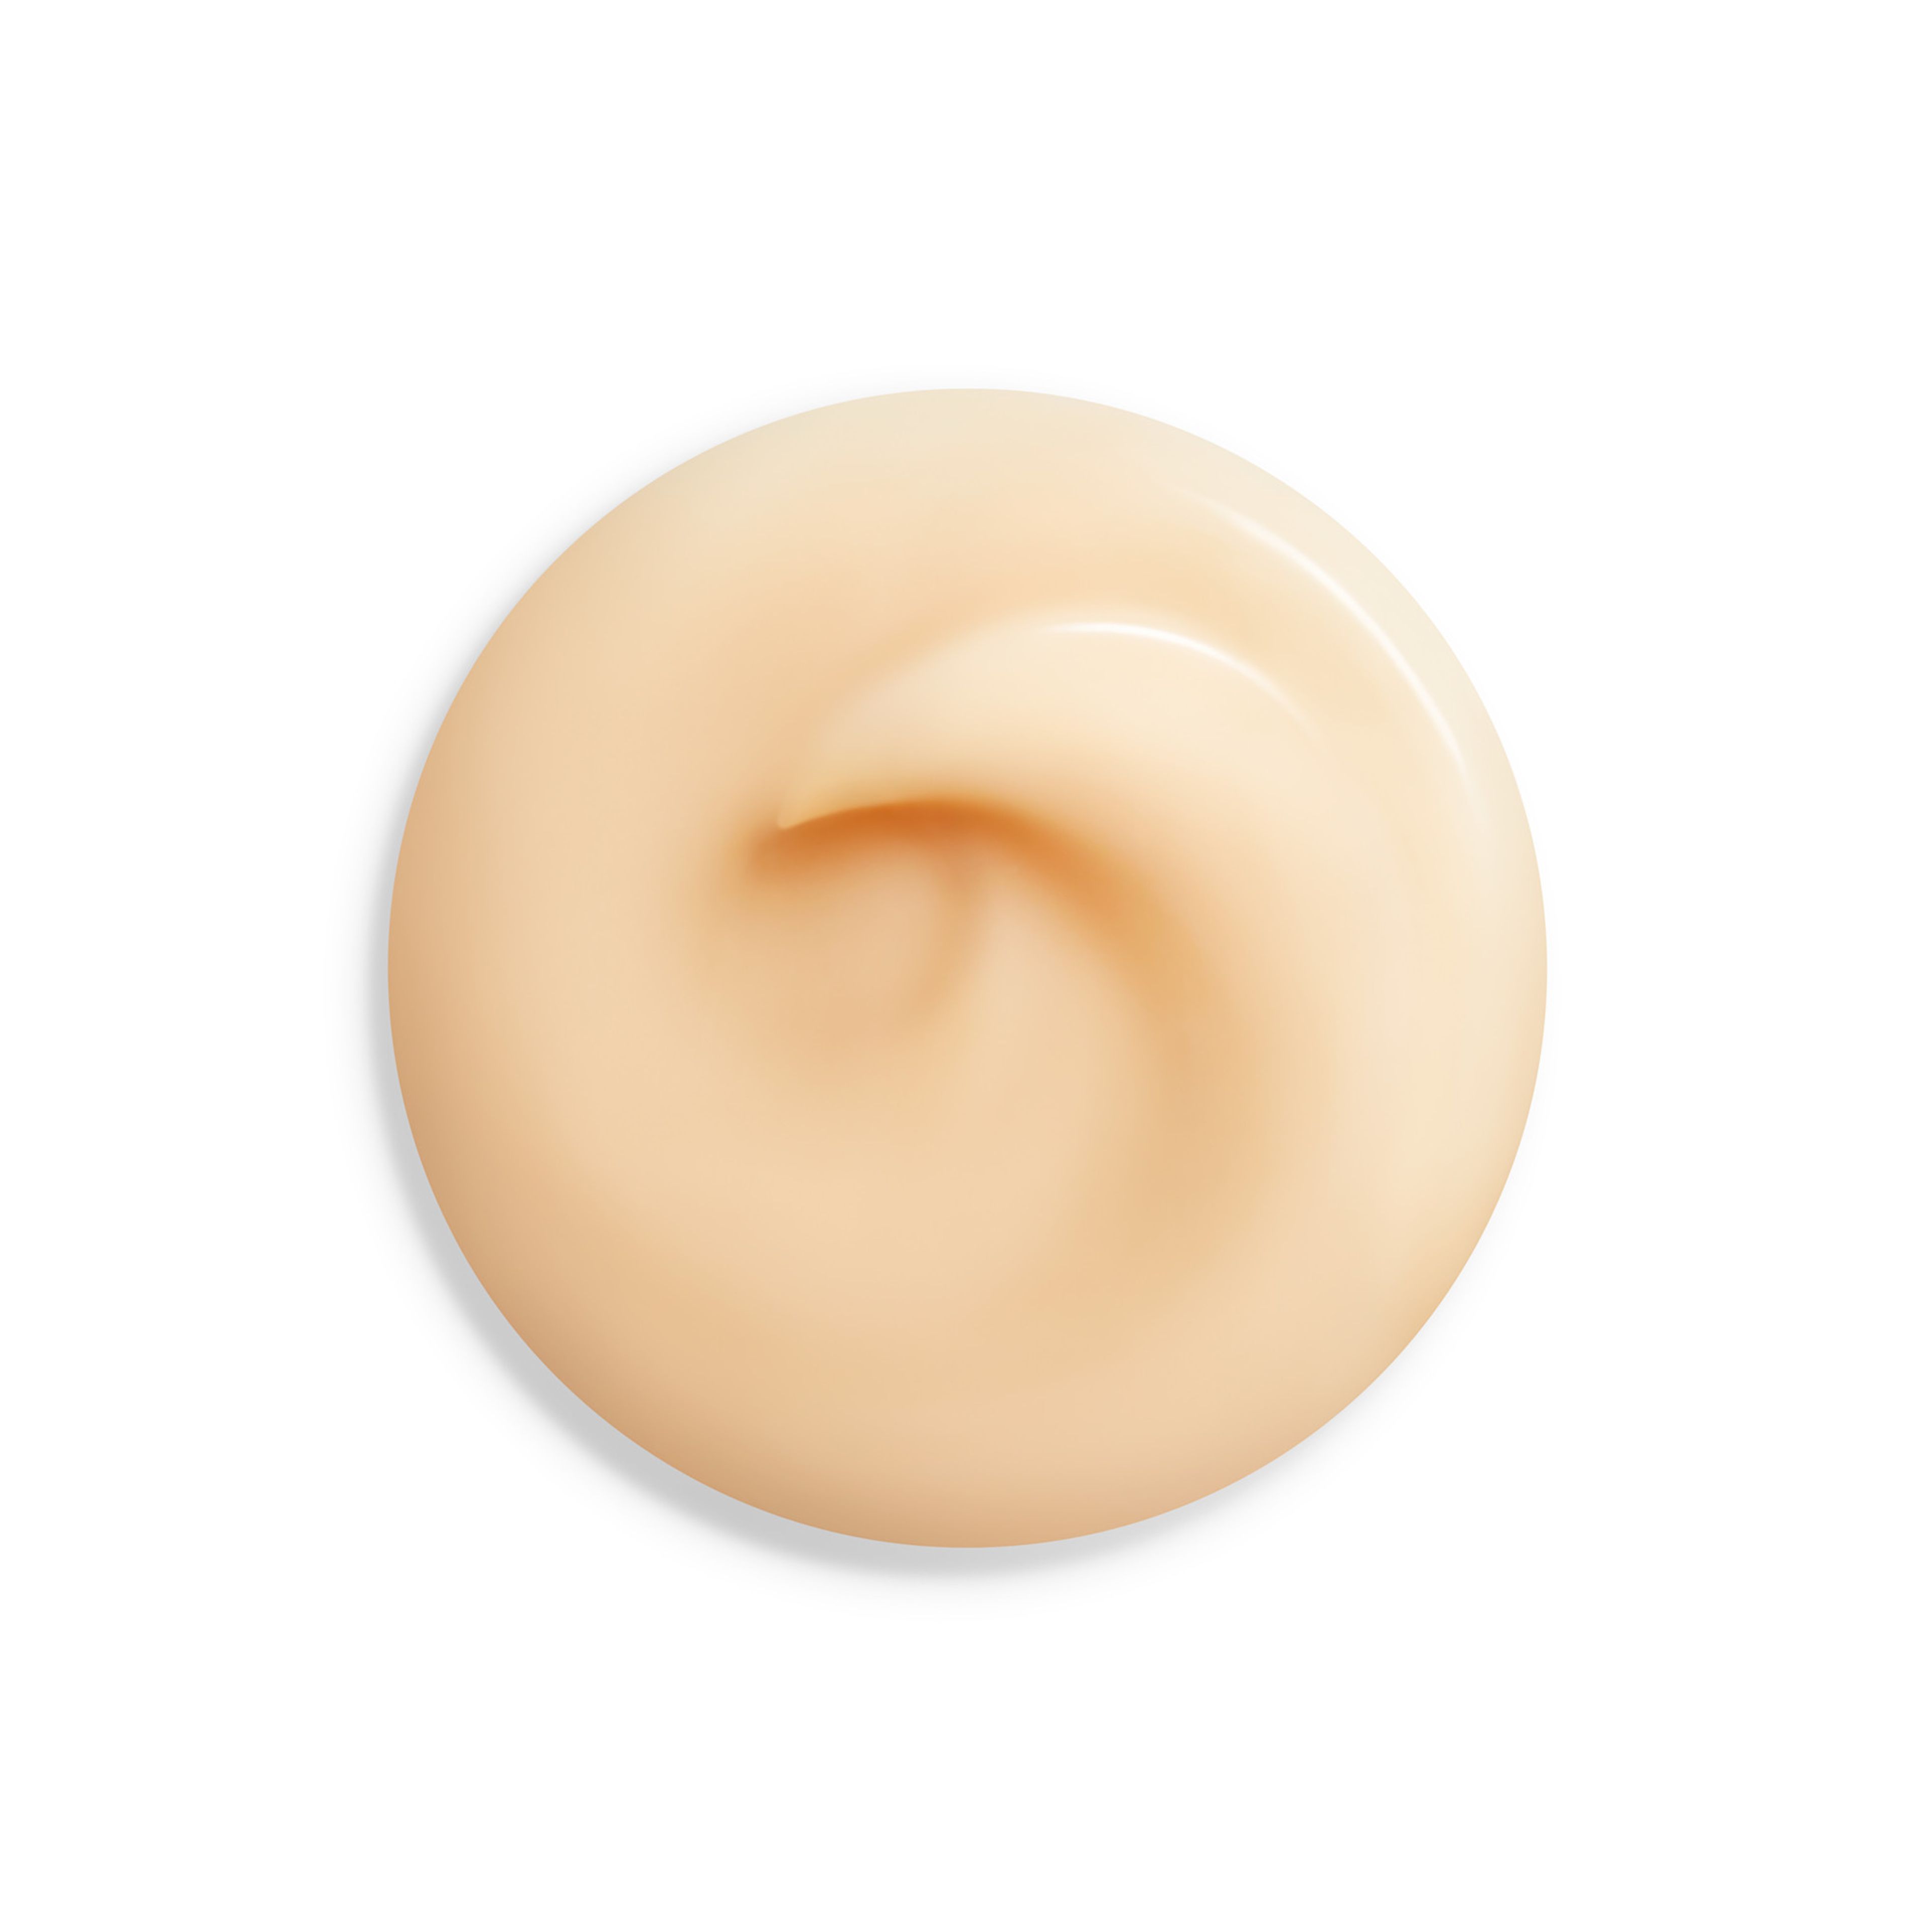 Shiseido Overnight Wrinkle Resisting Cream 2